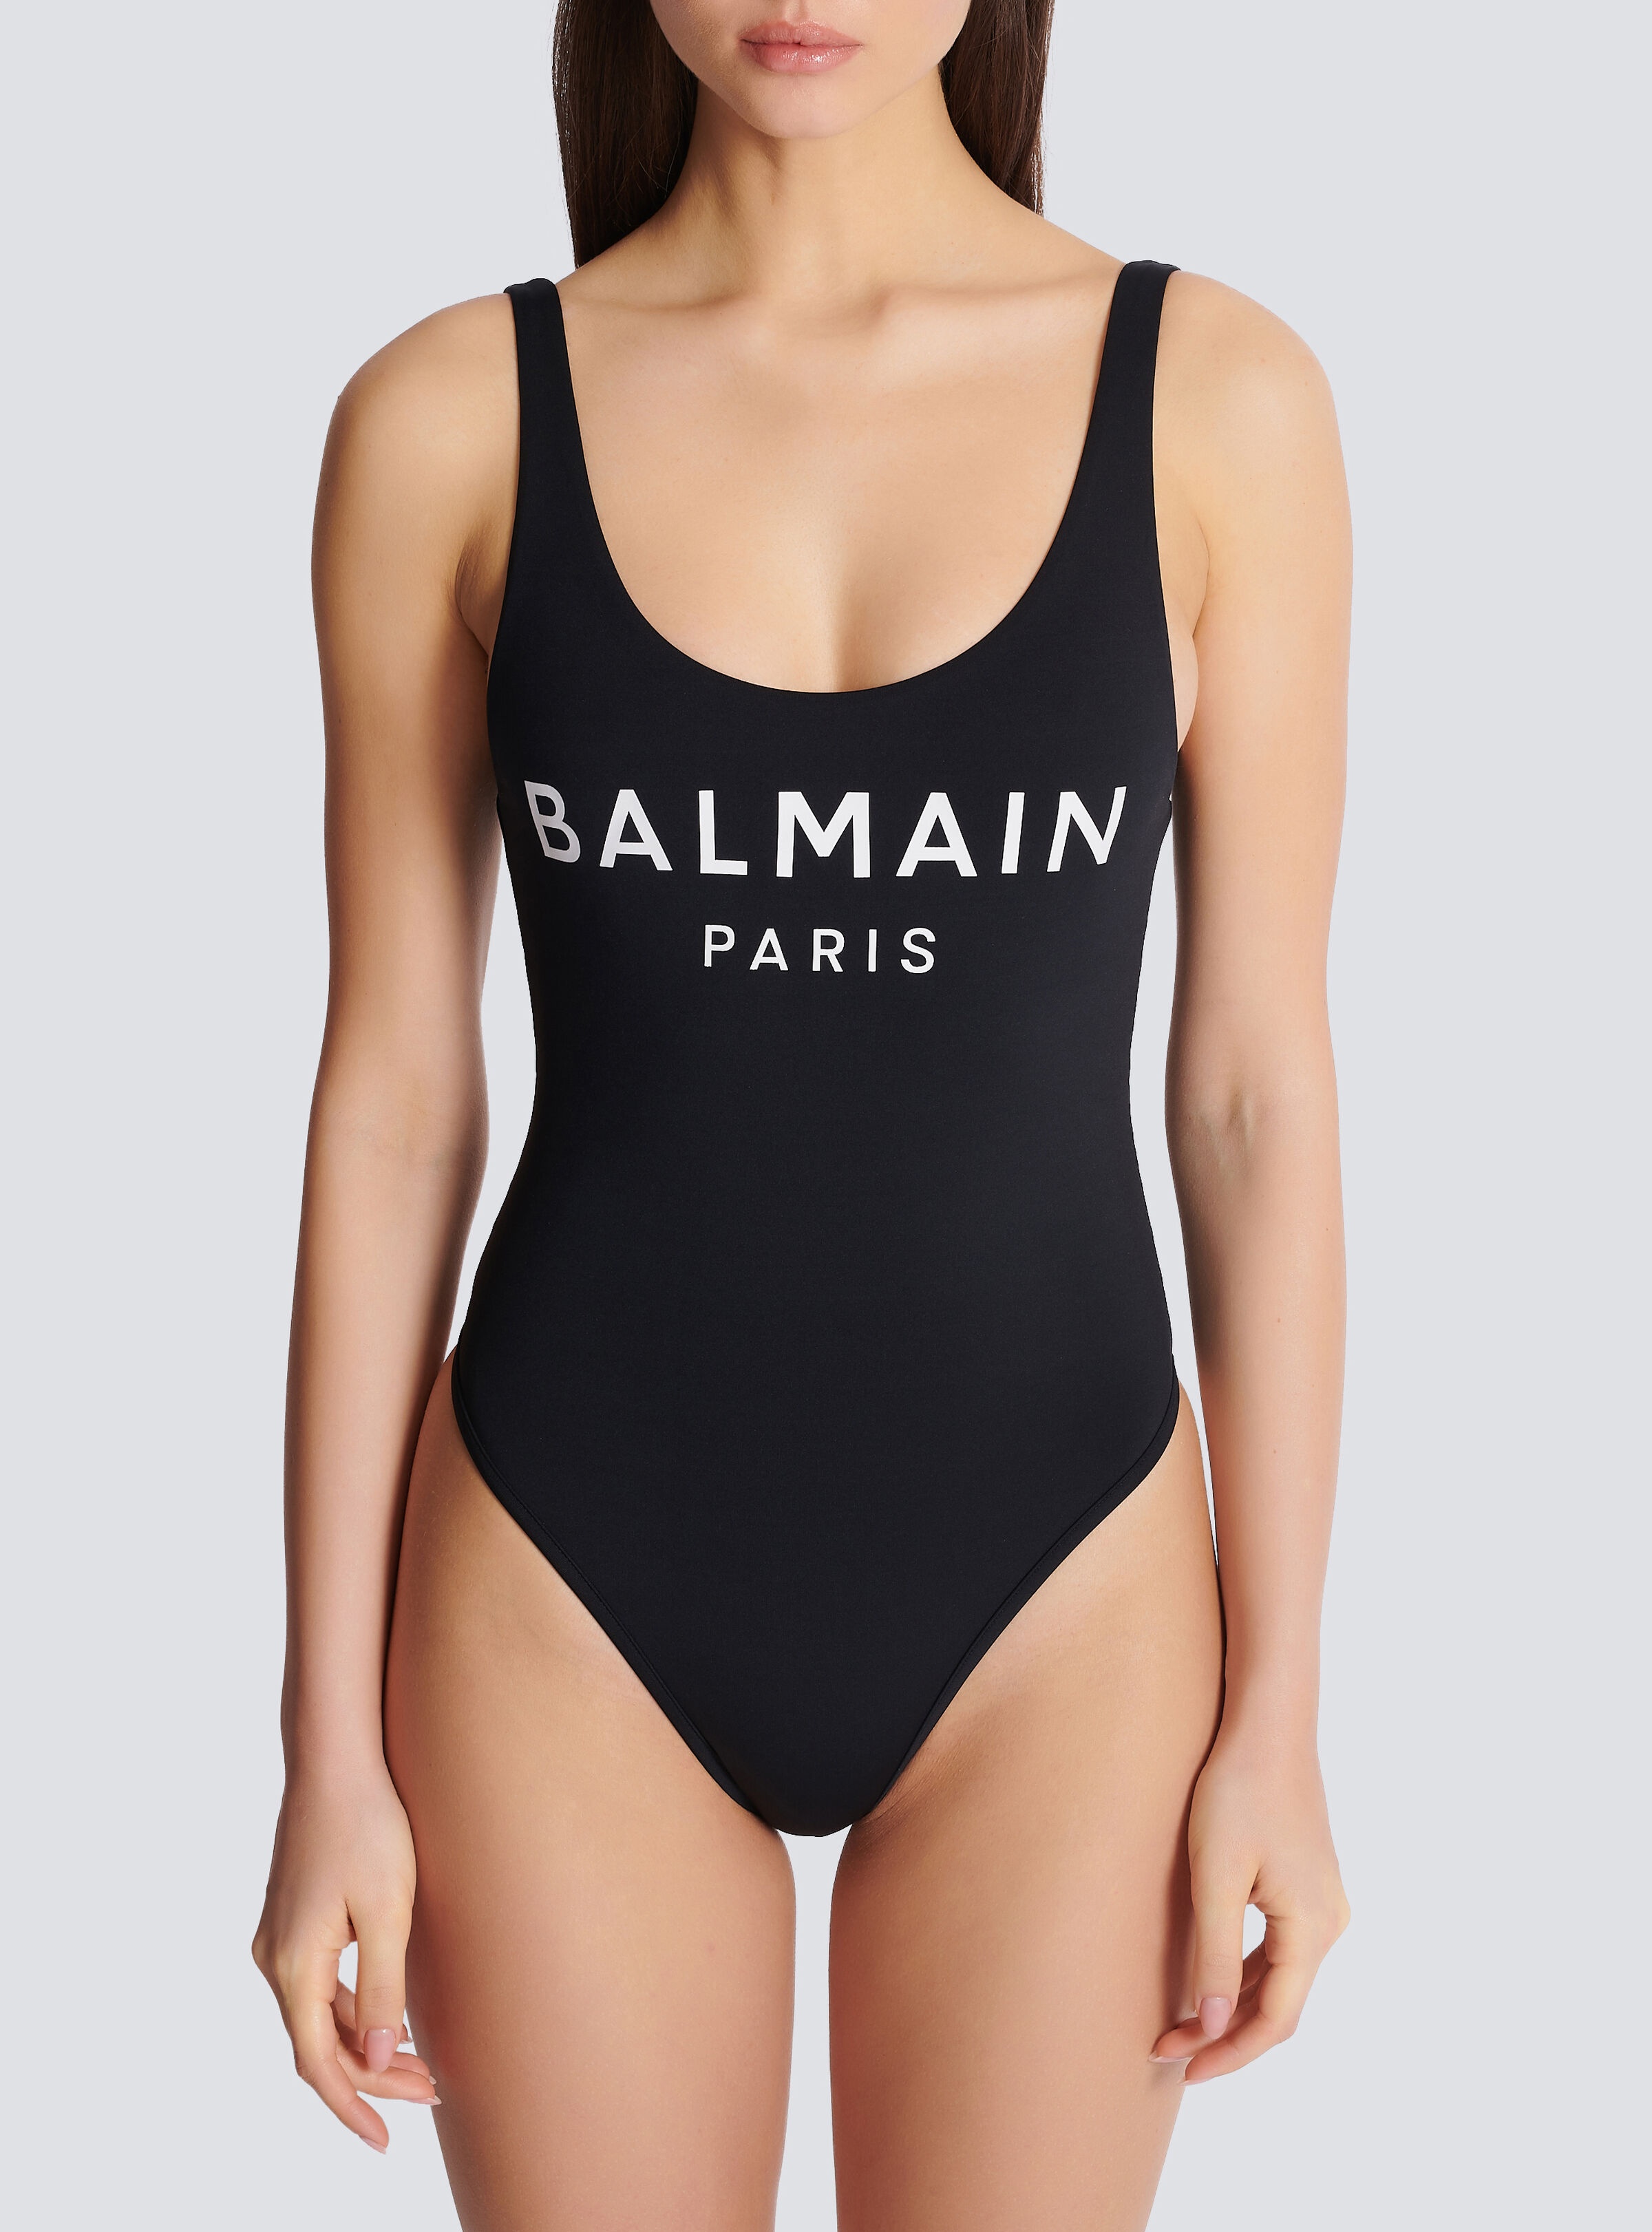 Balmain Paris swimsuit - 5